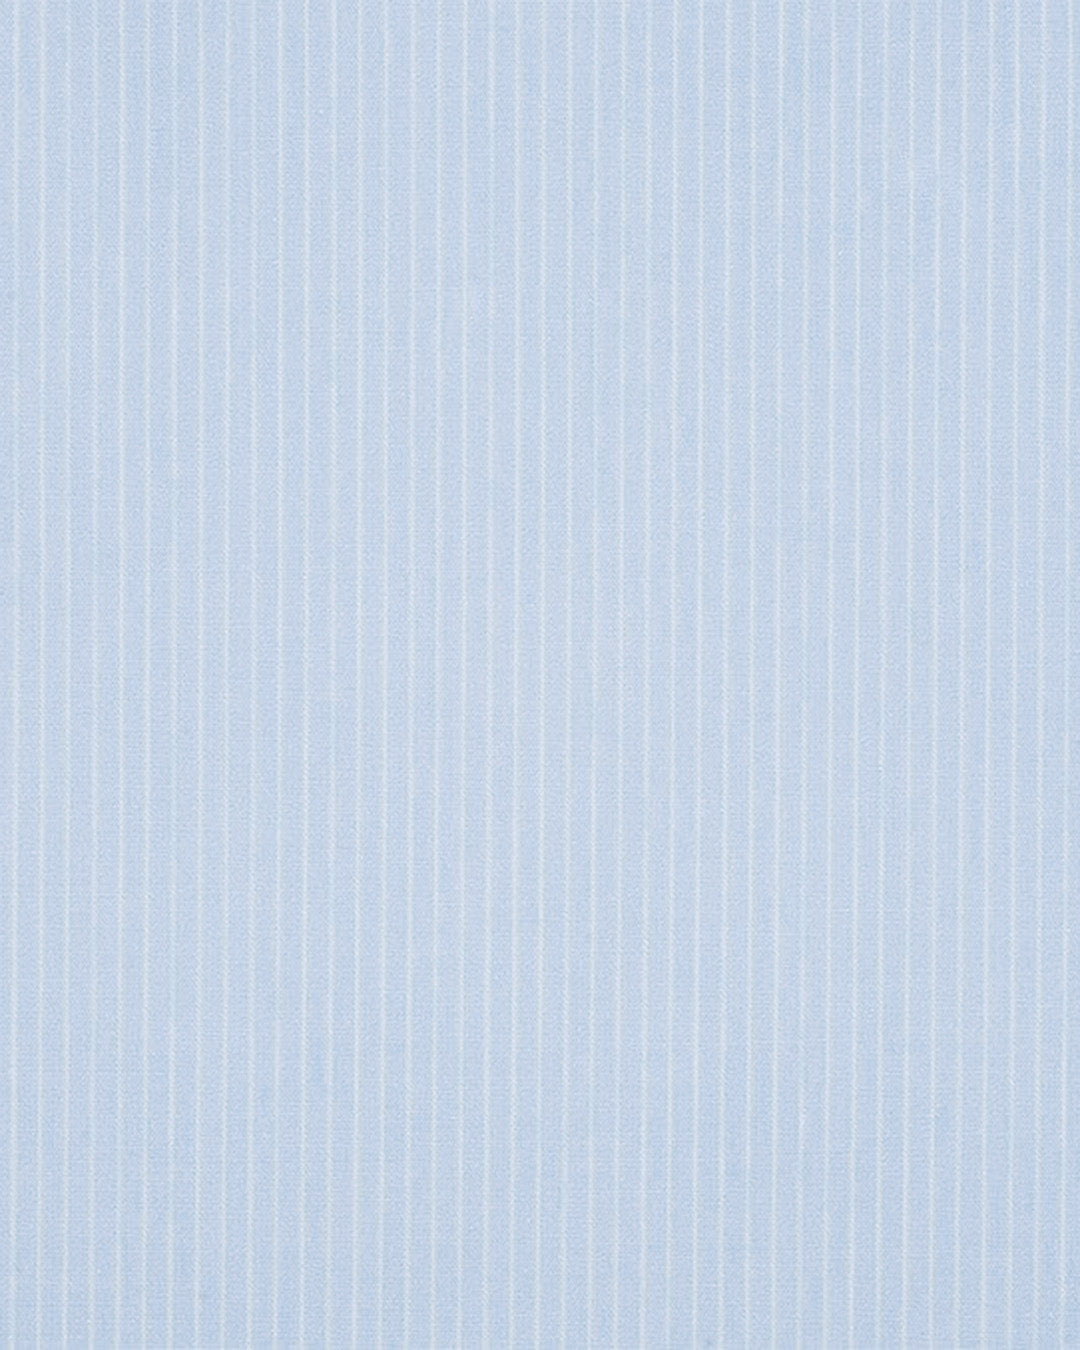 Pale Blue Stripes Ice